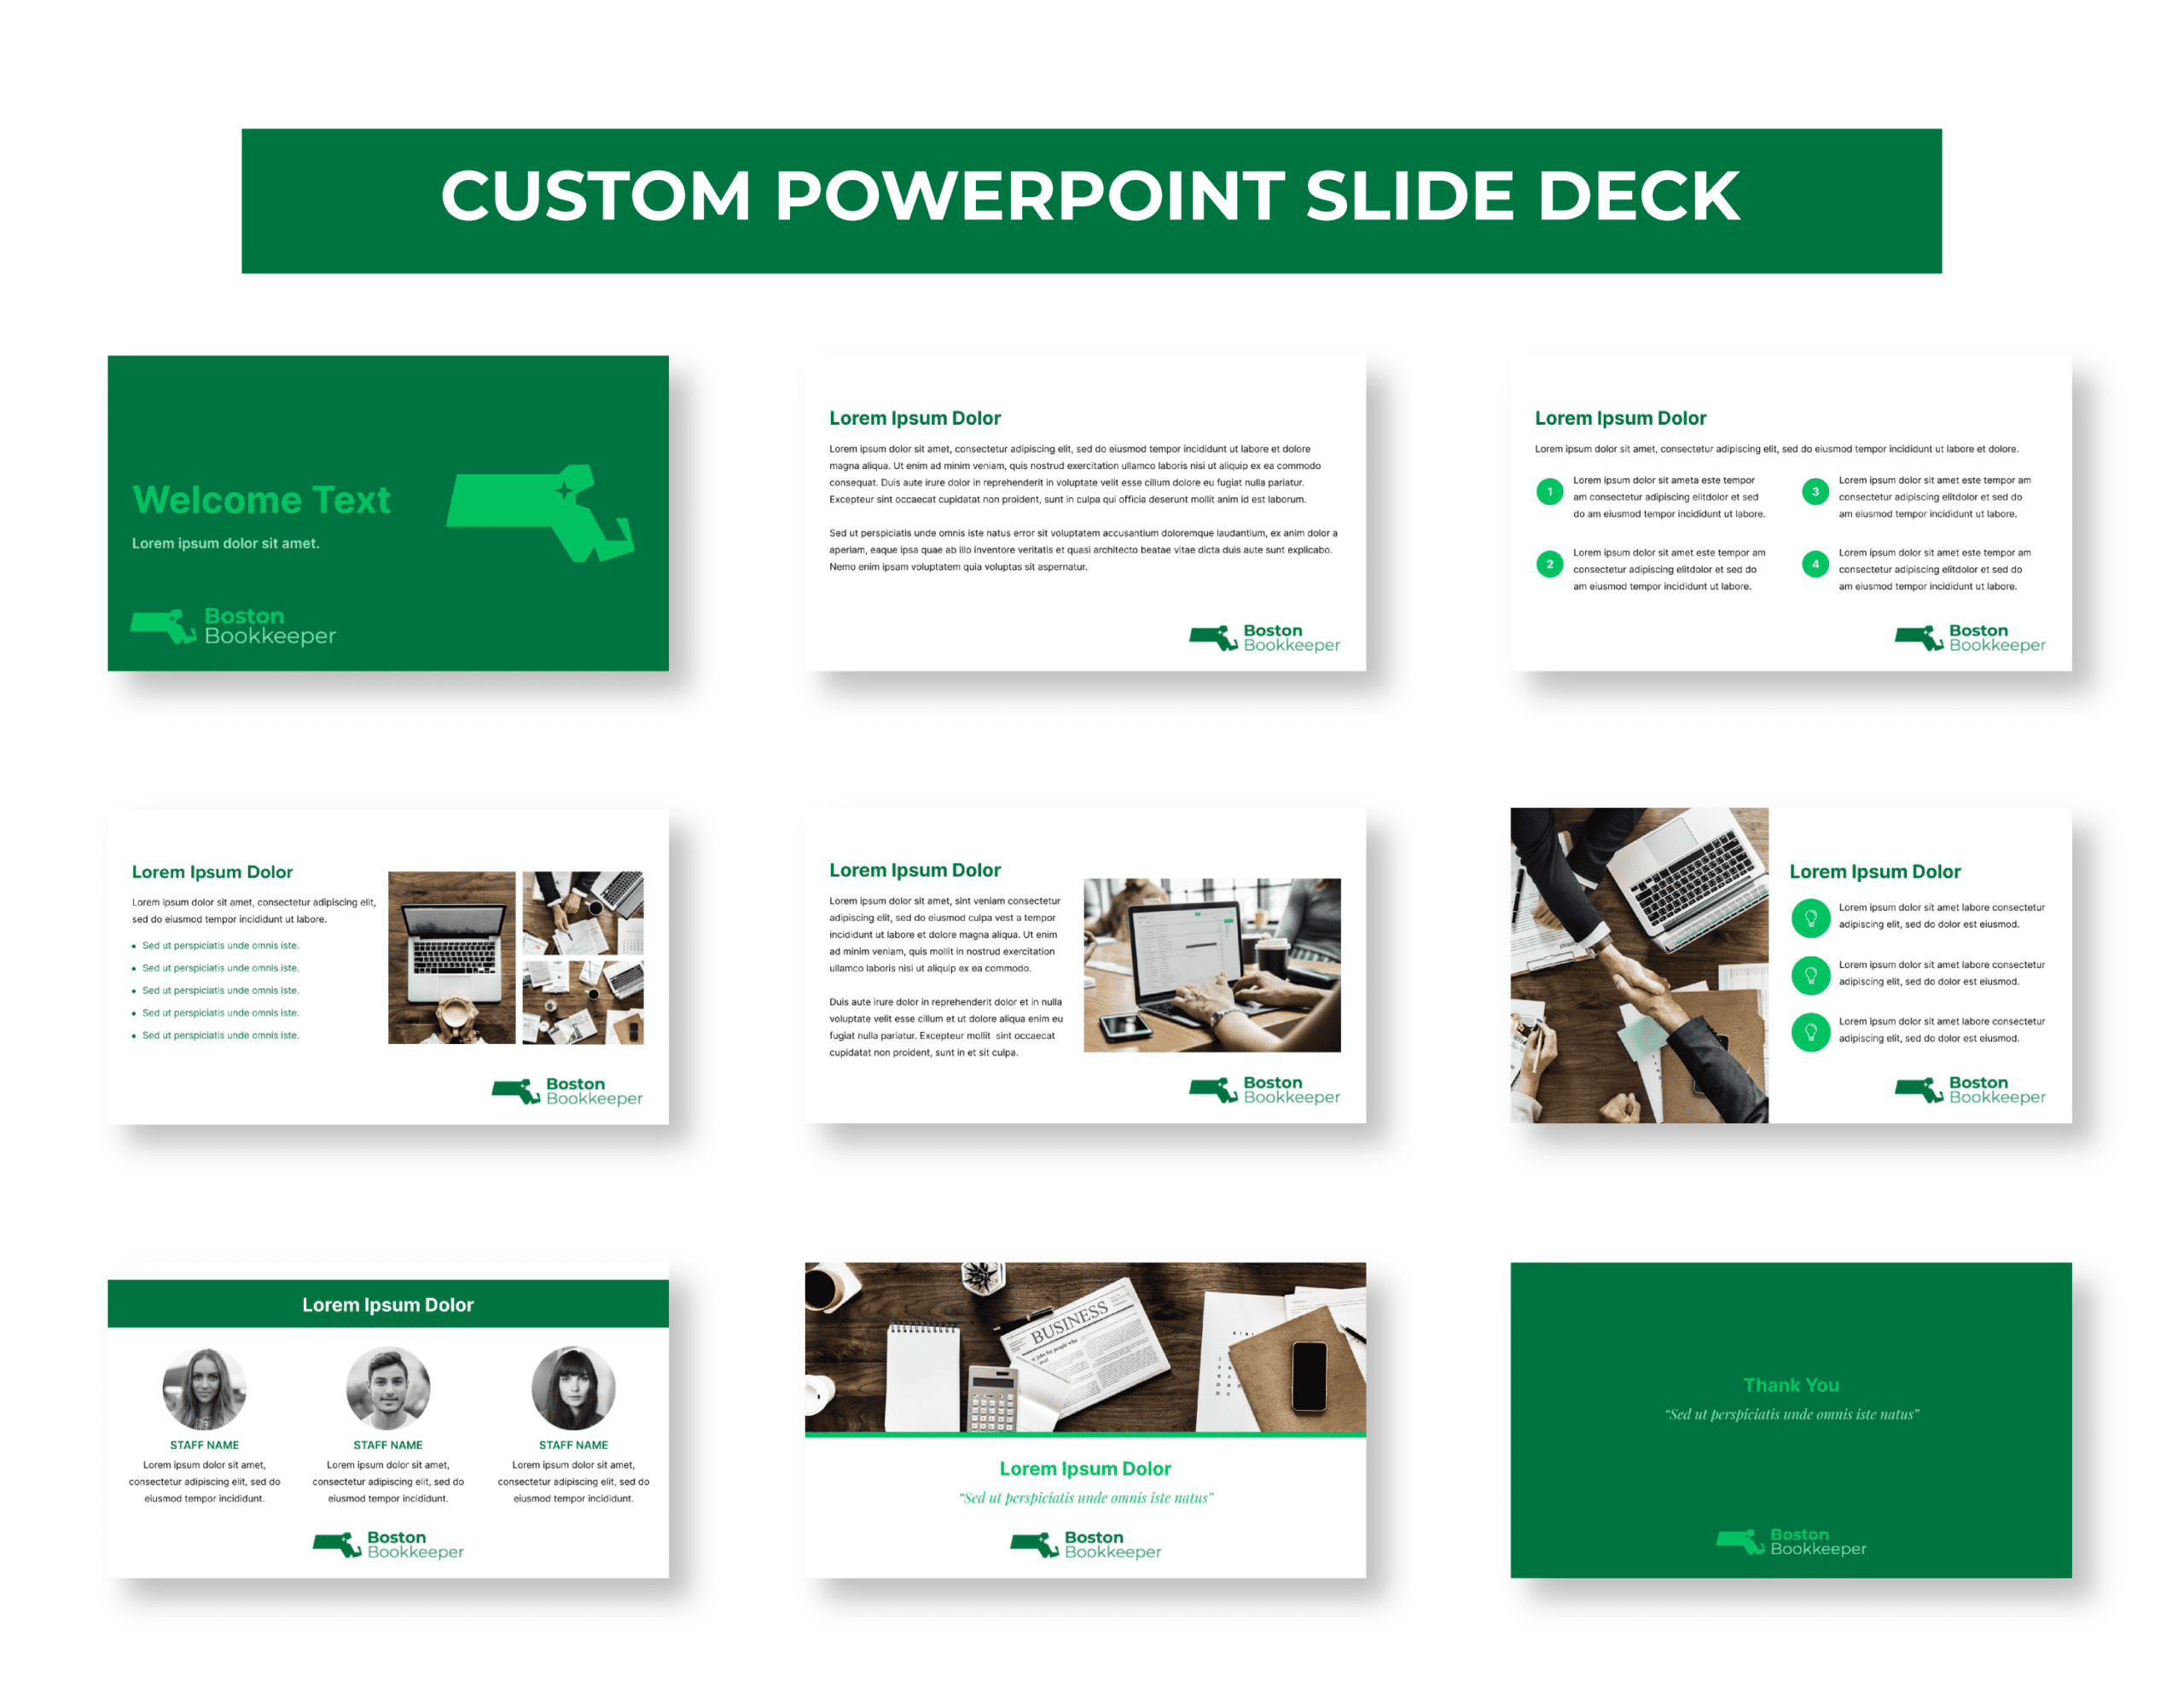 05Boston_Bookkeeper__Custom PowerPoint Slide Deck